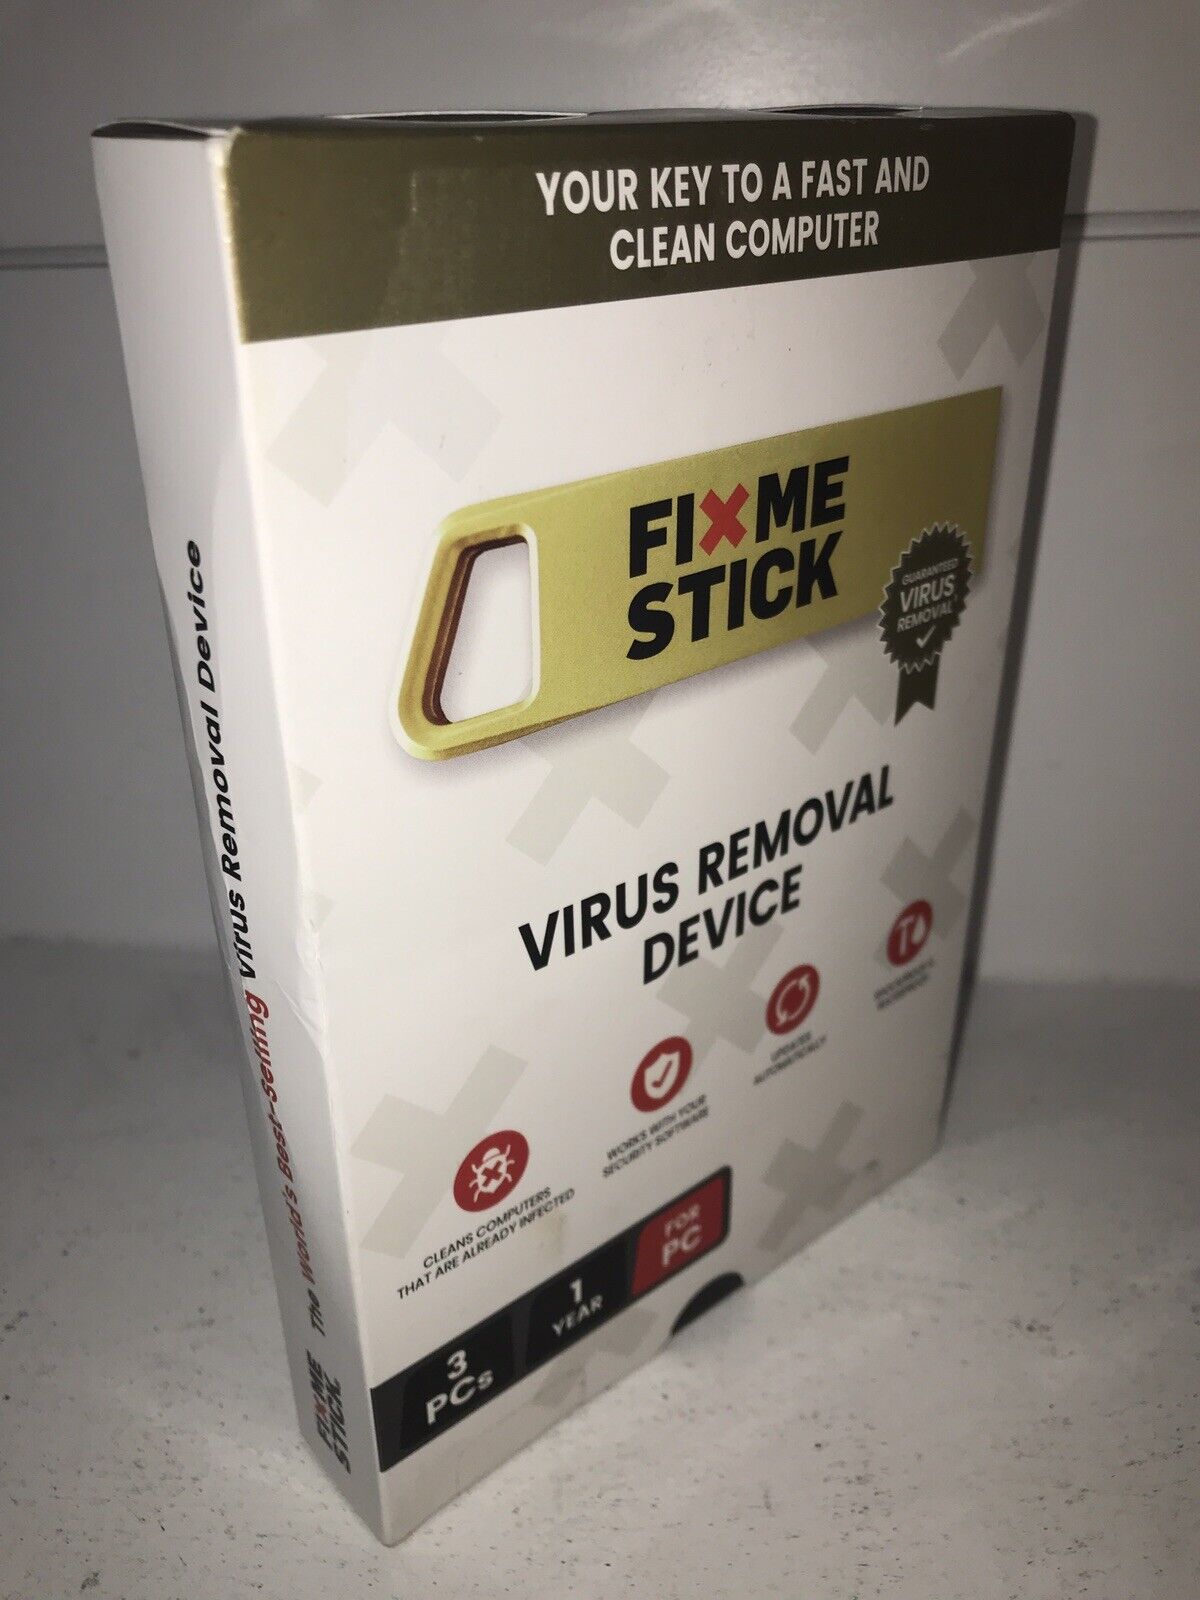 Fix Me Stick FixMeStick FixMe Virus Removal Device for PC 1 Year 3 PCs New